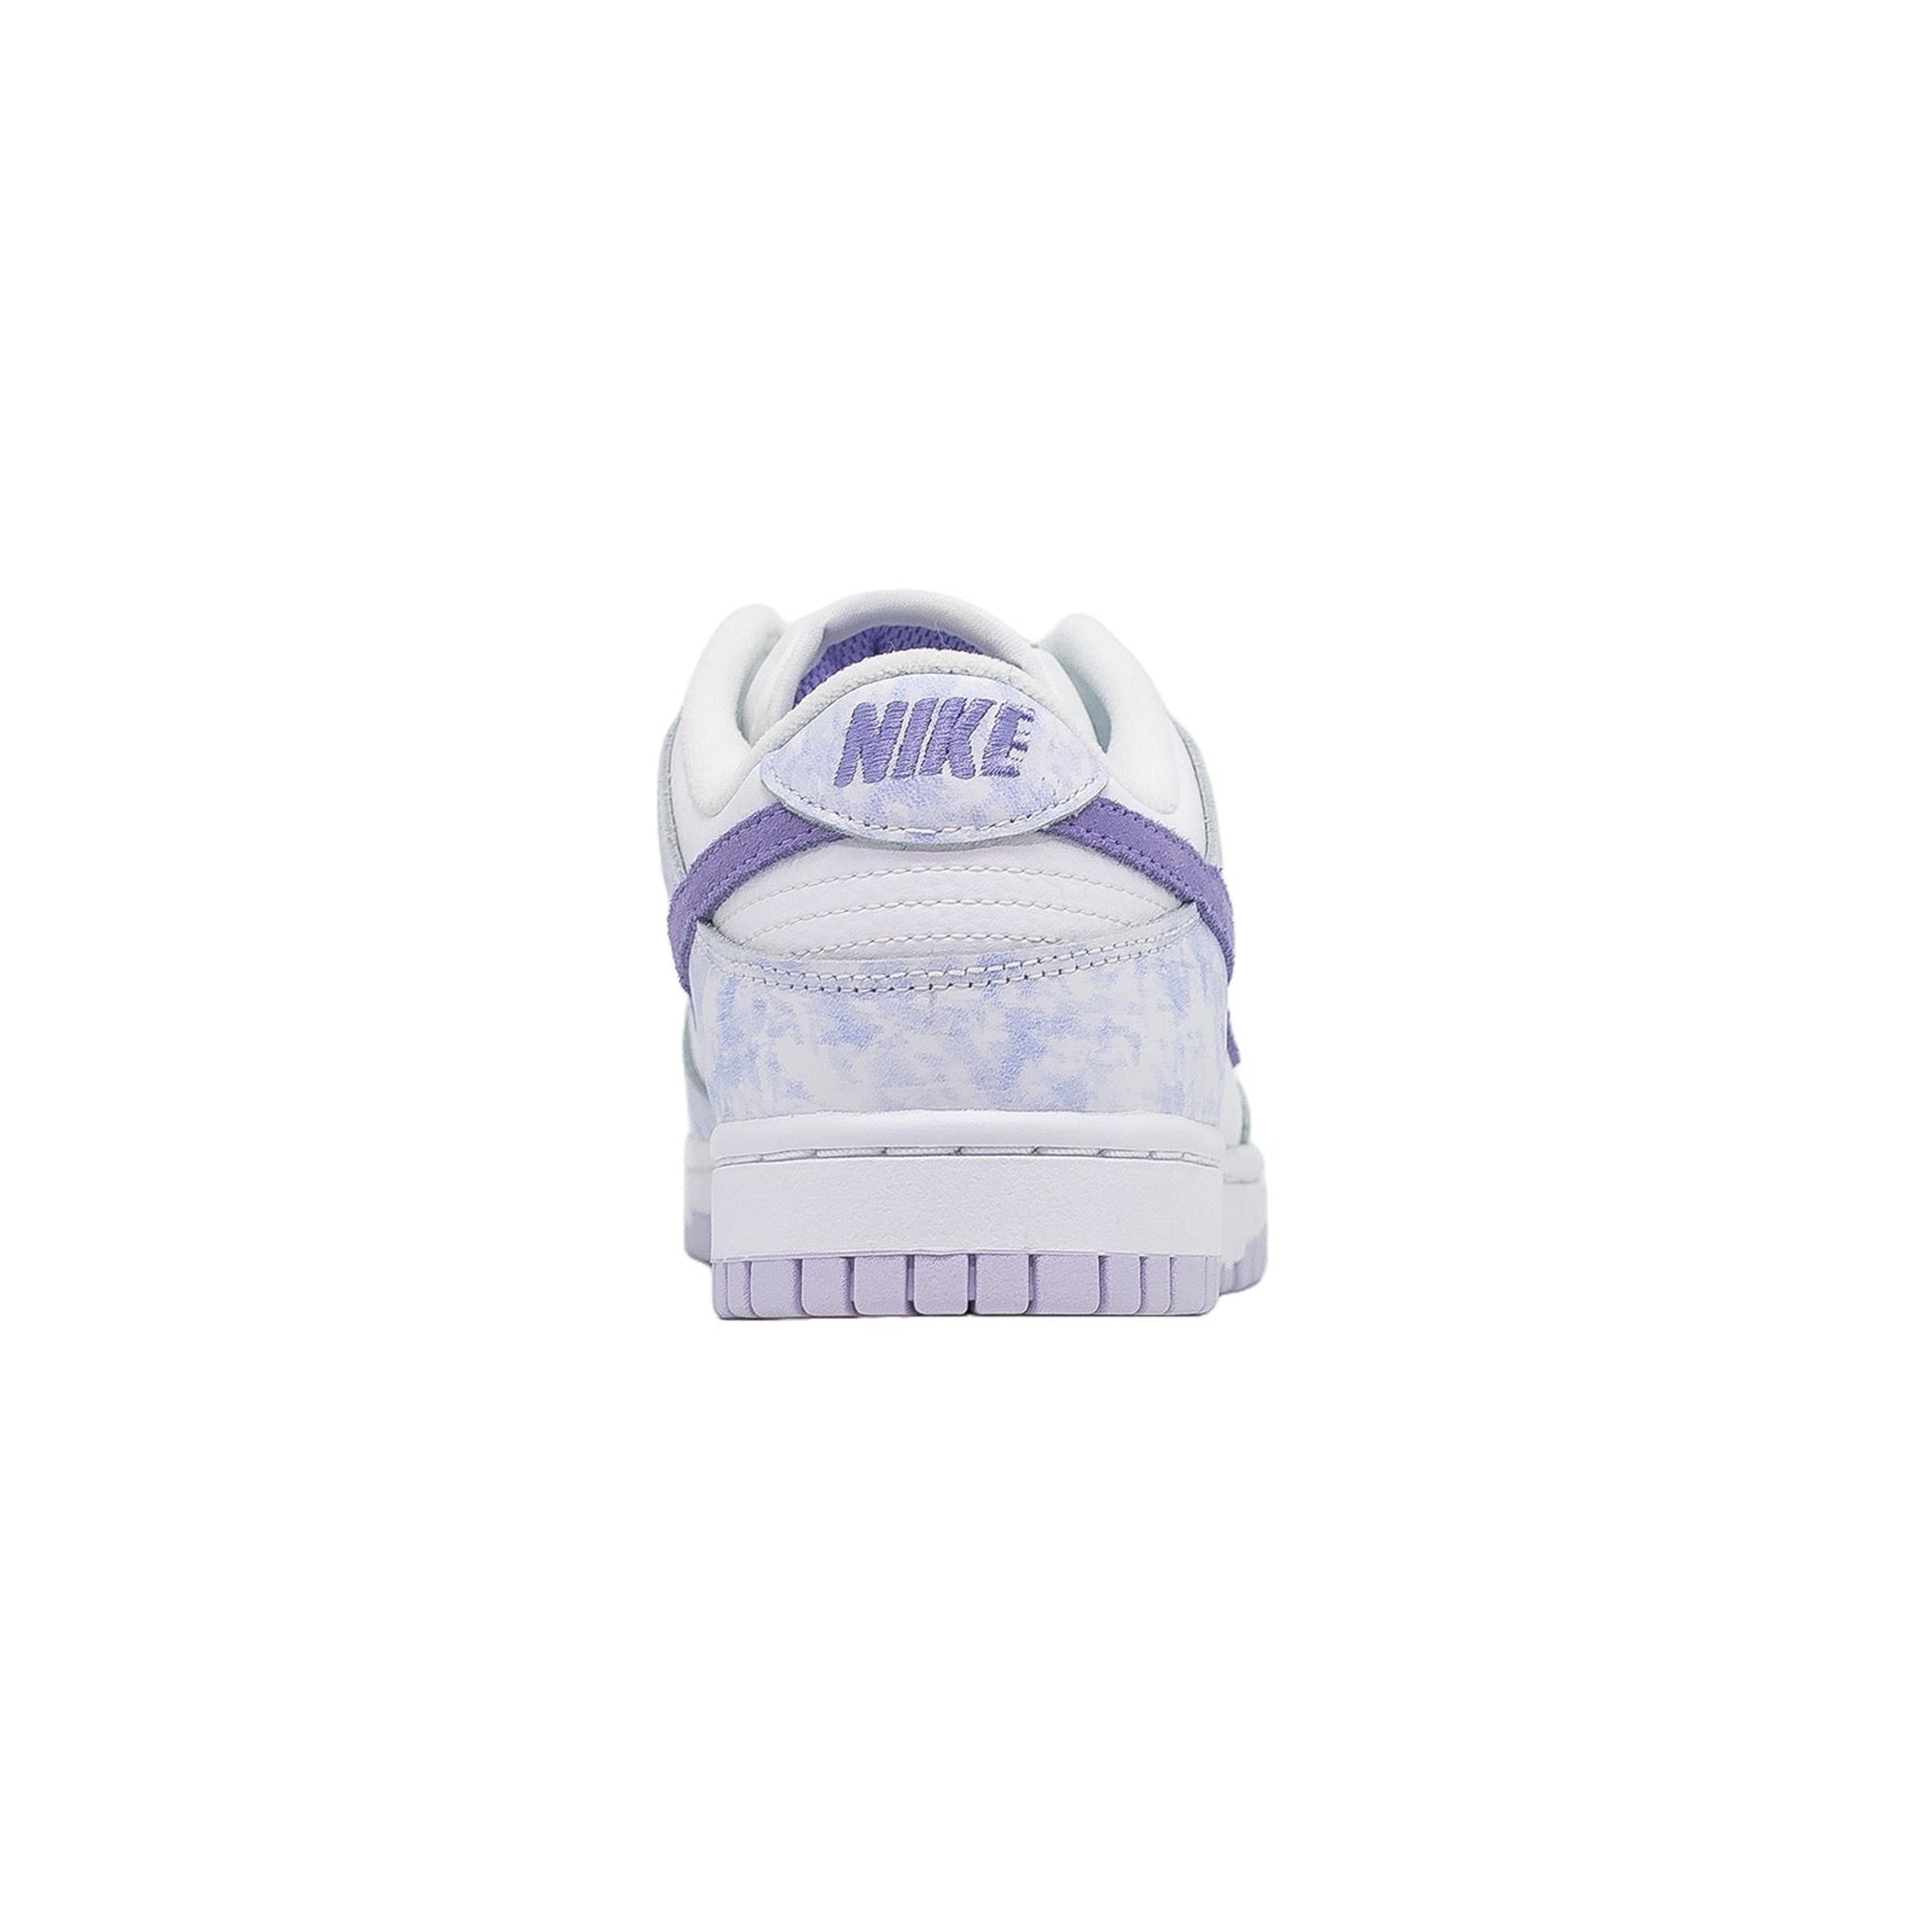 Alternate View 3 of Women's Nike Dunk Low, OG Purple Pulse